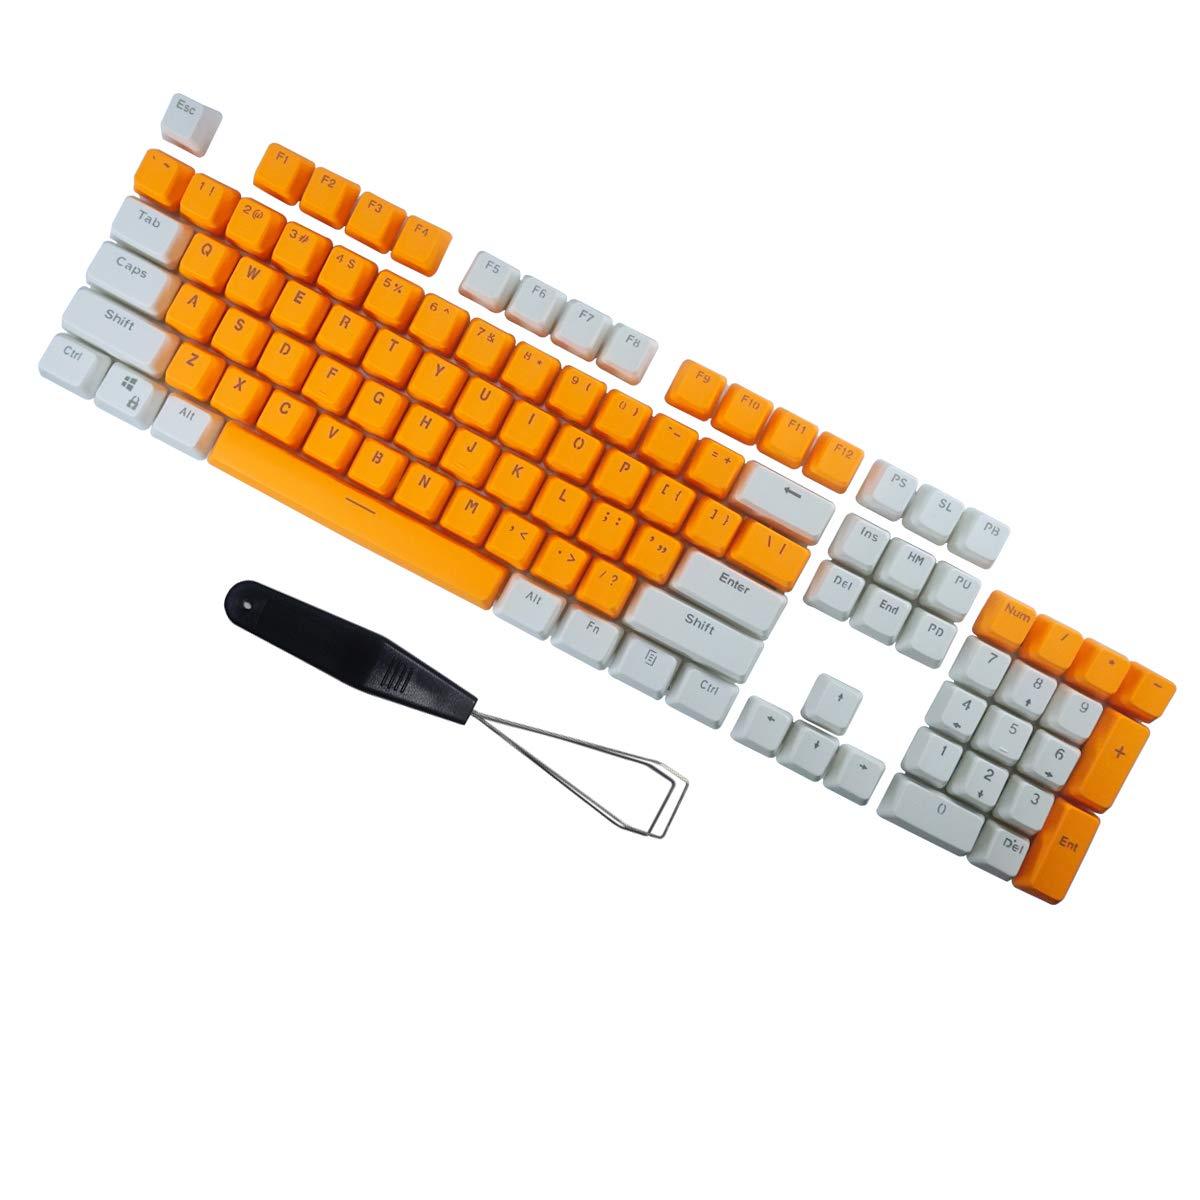 NPKC 104 Key PBT Keycaps - White/Orange - Store 974 | ستور ٩٧٤